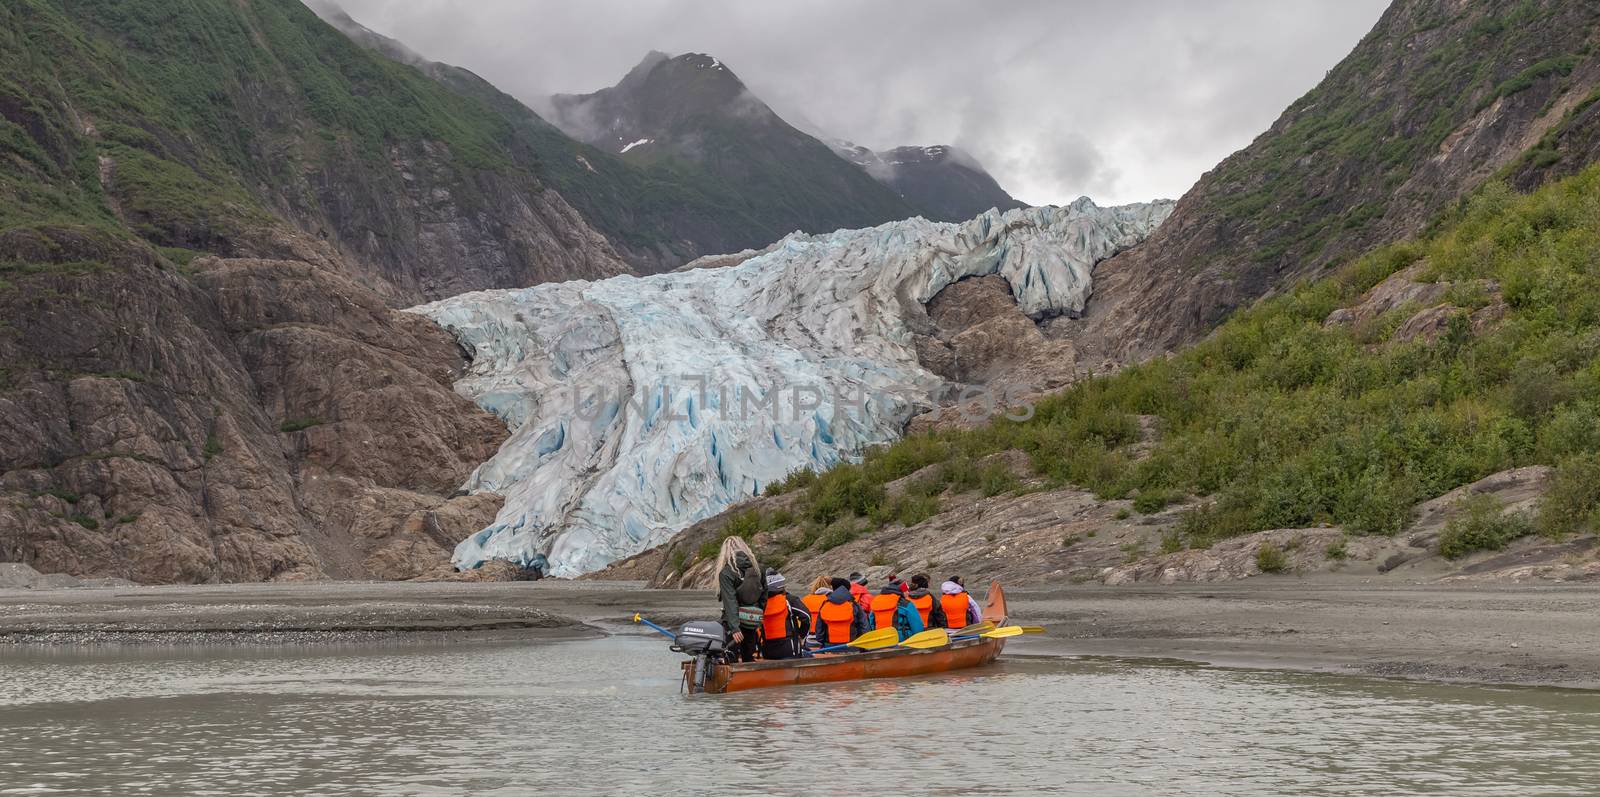 Davidson Glacier, Alaska, US - June 29, 2018: Tourists and a guide sailing in a canoe towards Davidson Glacier